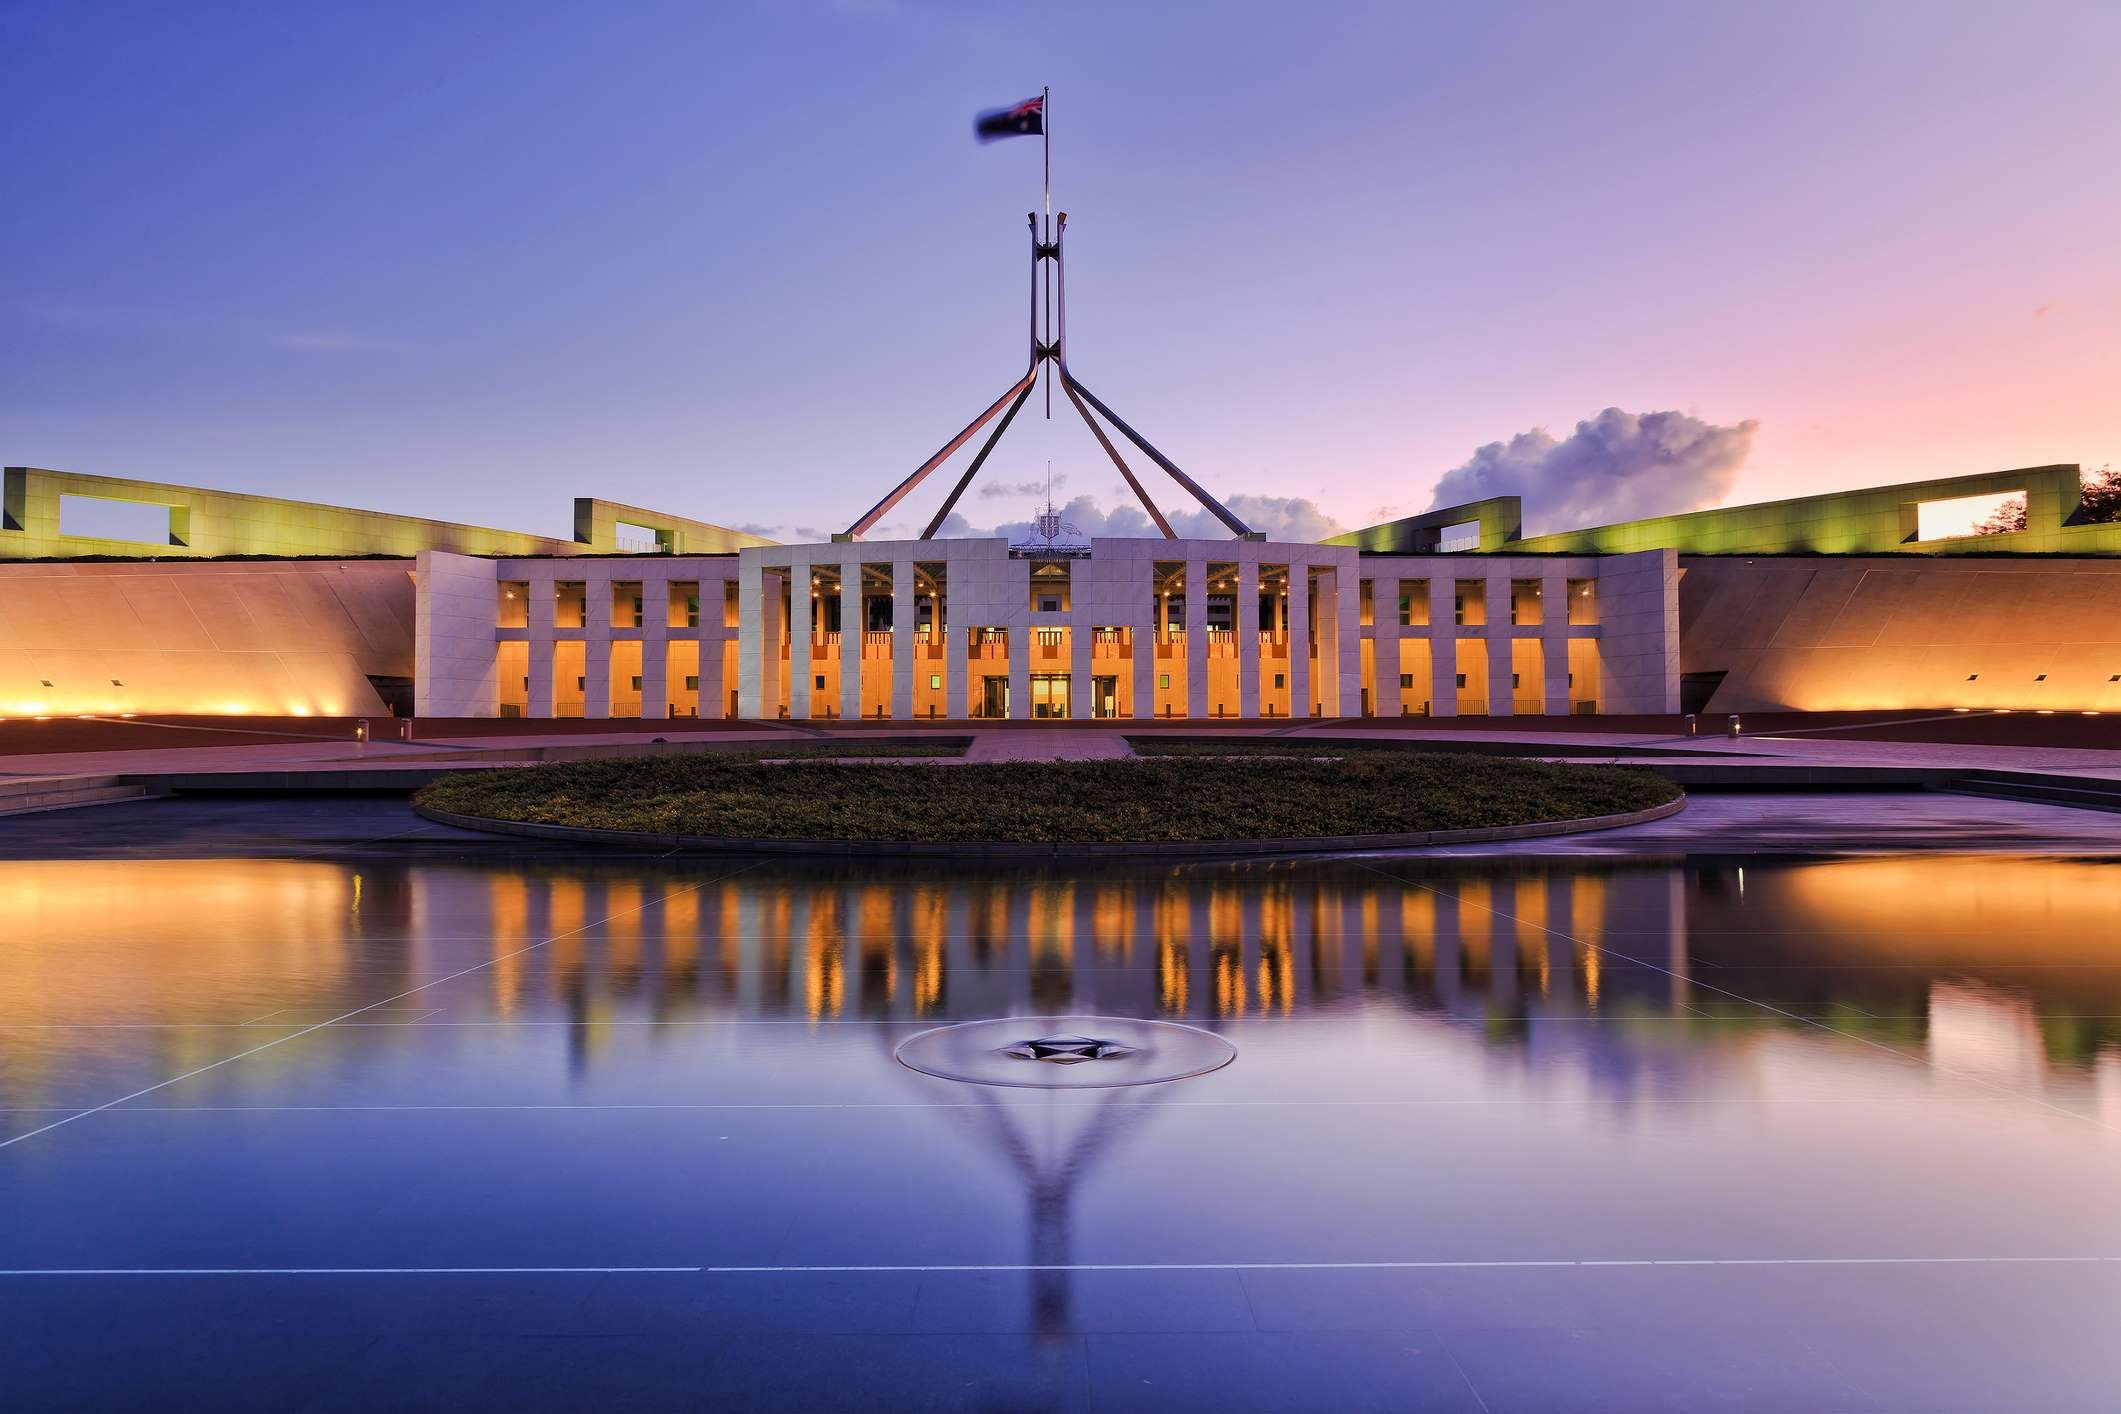 Dentist - Canberra, Australia